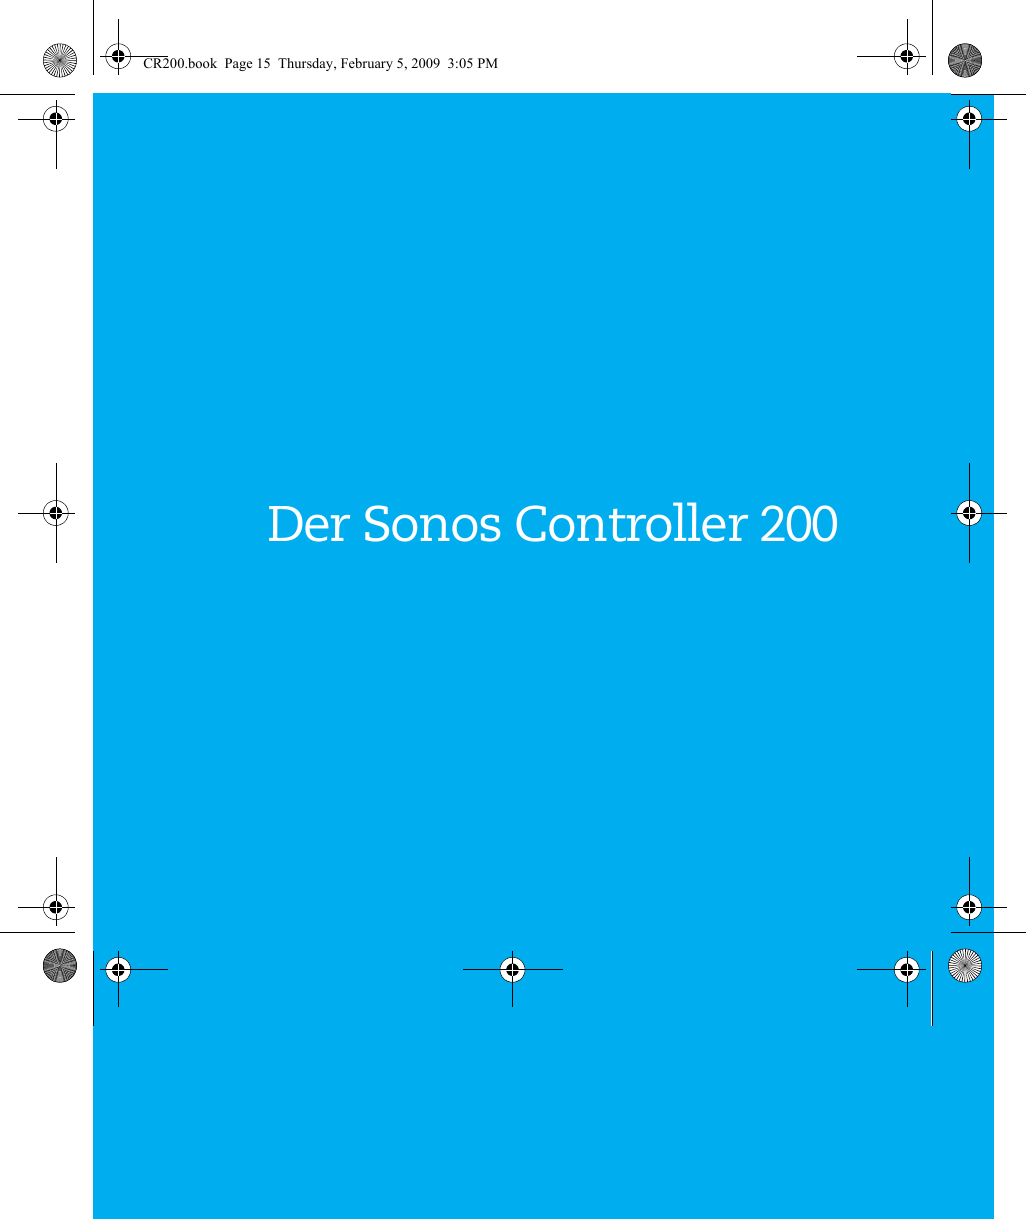 Der Sonos Controller 200CR200.book  Page 15  Thursday, February 5, 2009  3:05 PM